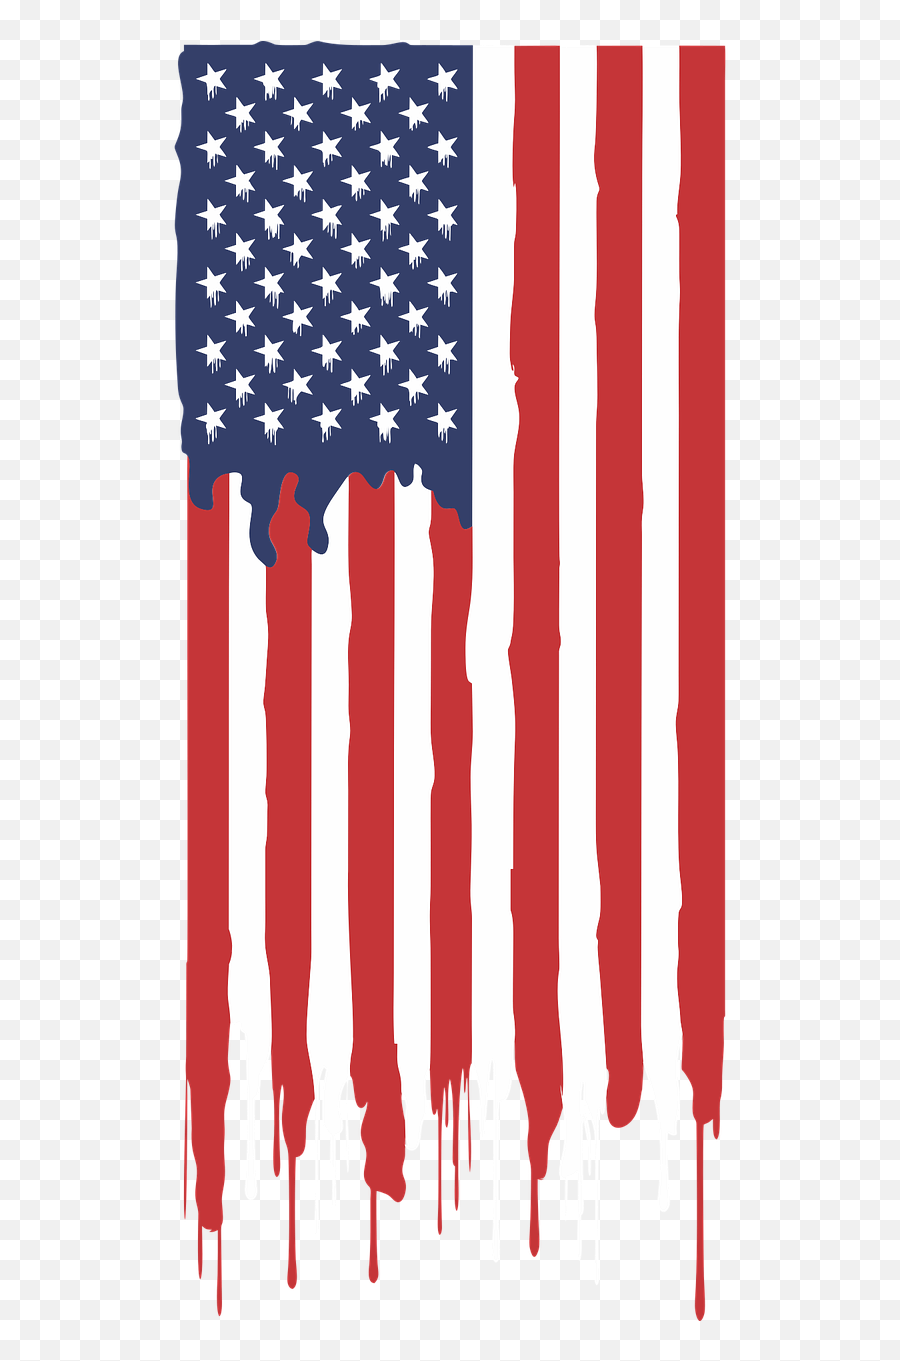 Download Free Photo Of American Flaggraffitiusaunited Emoji,Distressed Flag Clipart